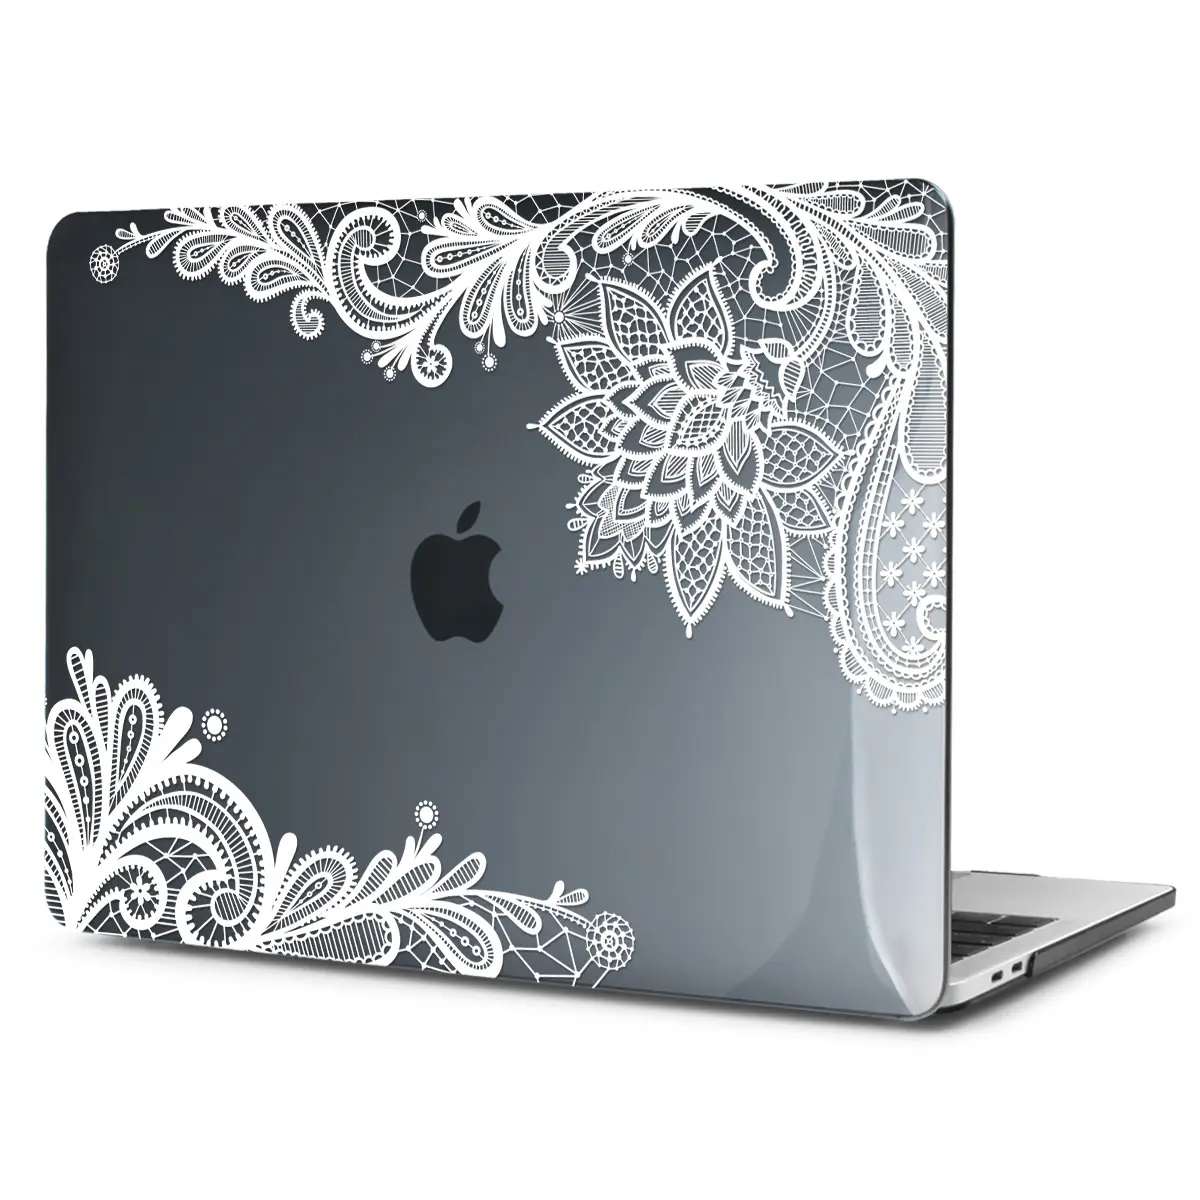 Laptop de renda branca impermeável, caixa de laptop de renda branca com design fosco para macbook pro13